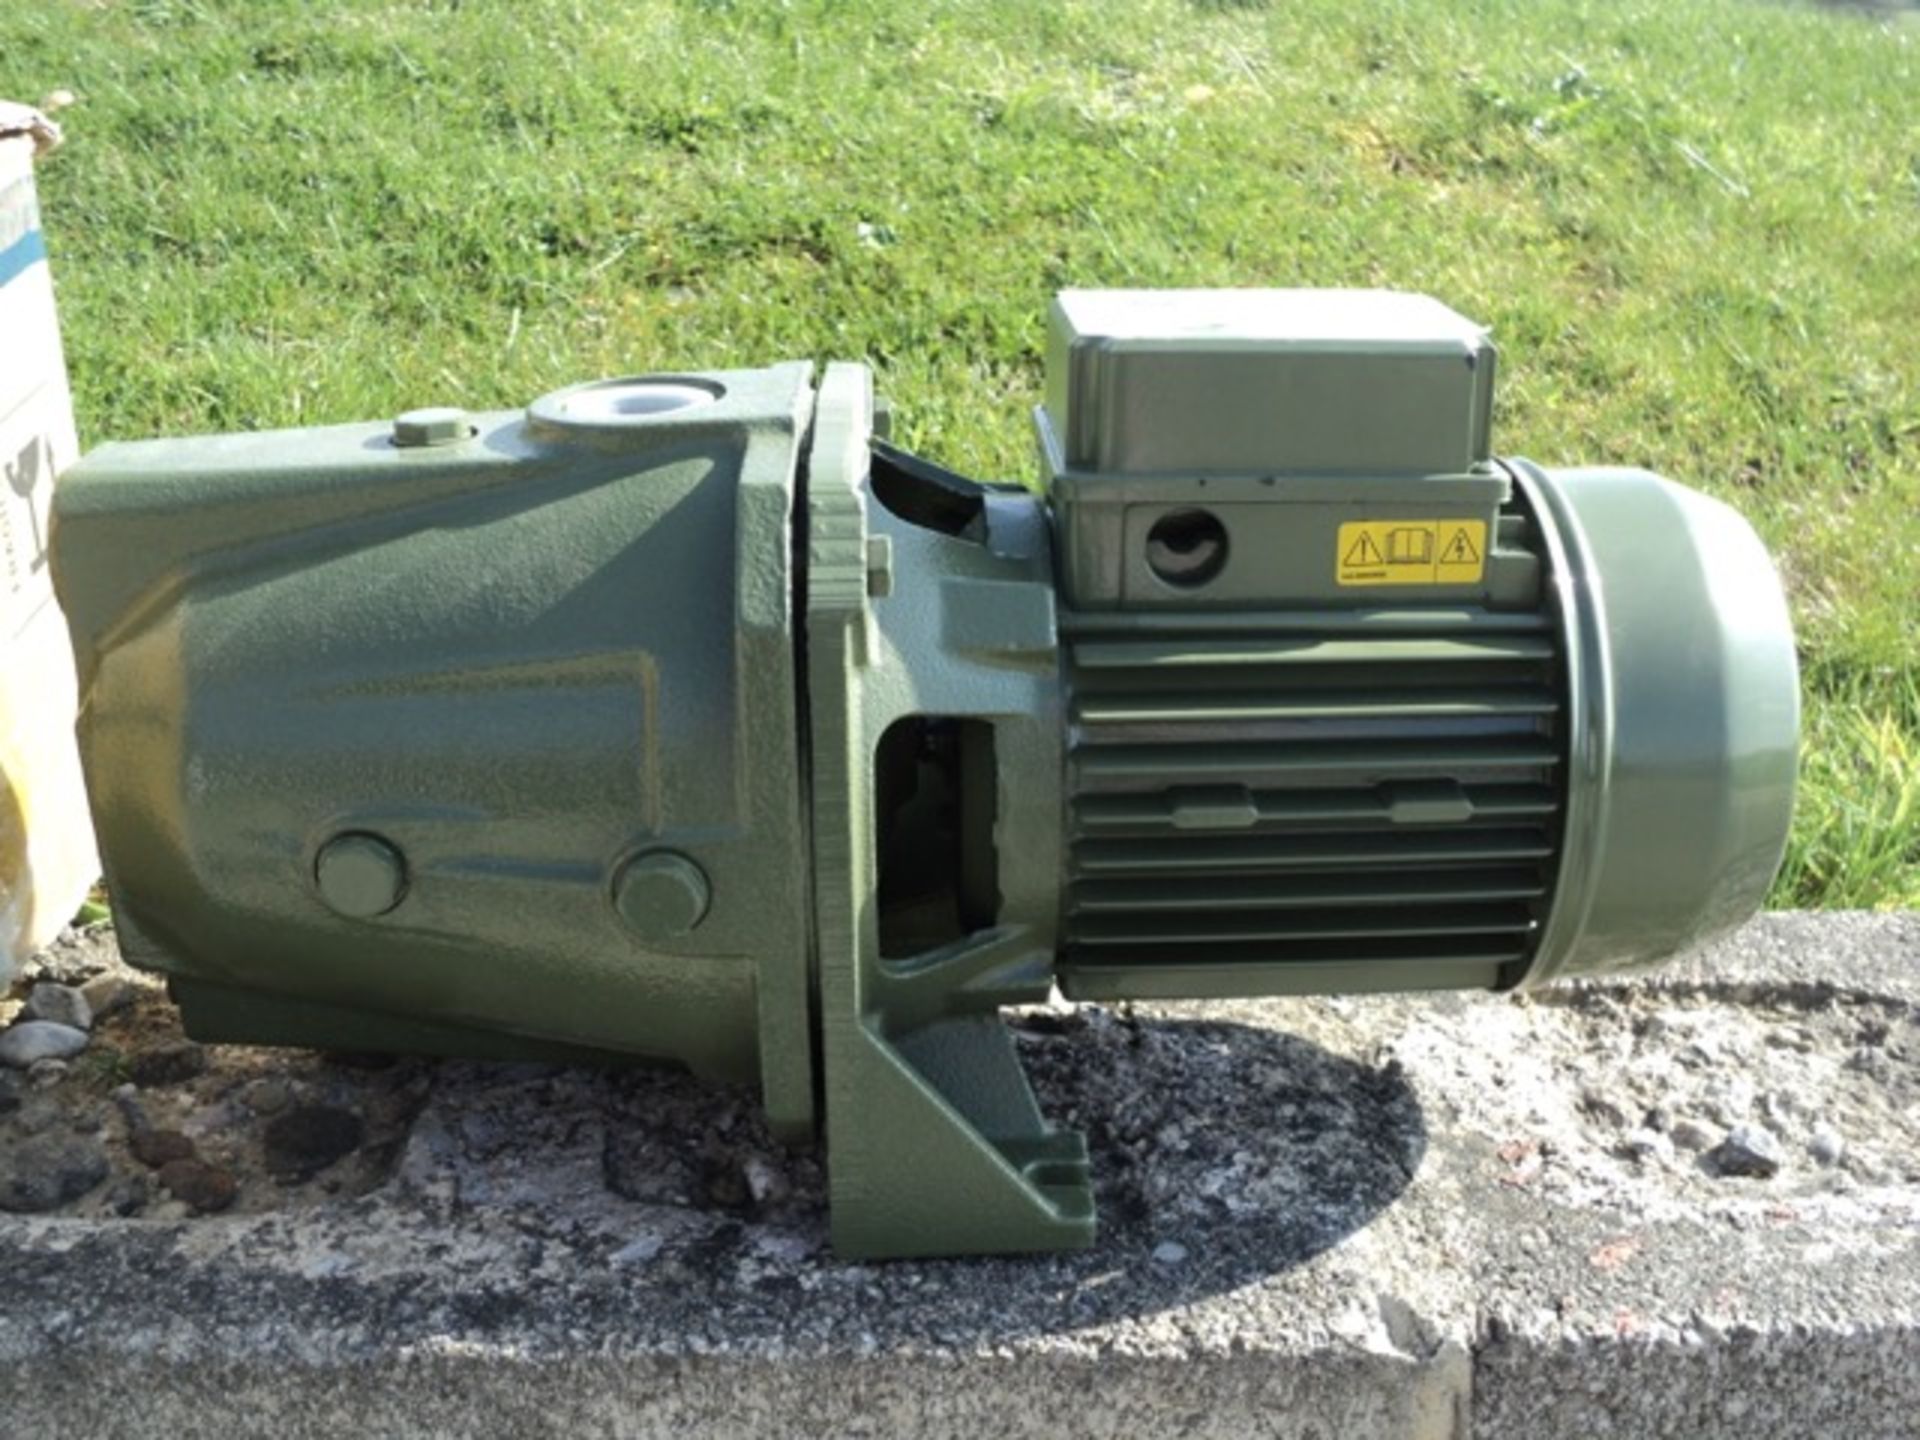 Saer M60 Electric Self Priming Pump - BNIB - RRP £180+vat - Hp0.5 - Hz 50 - 230 volts - Image 2 of 5